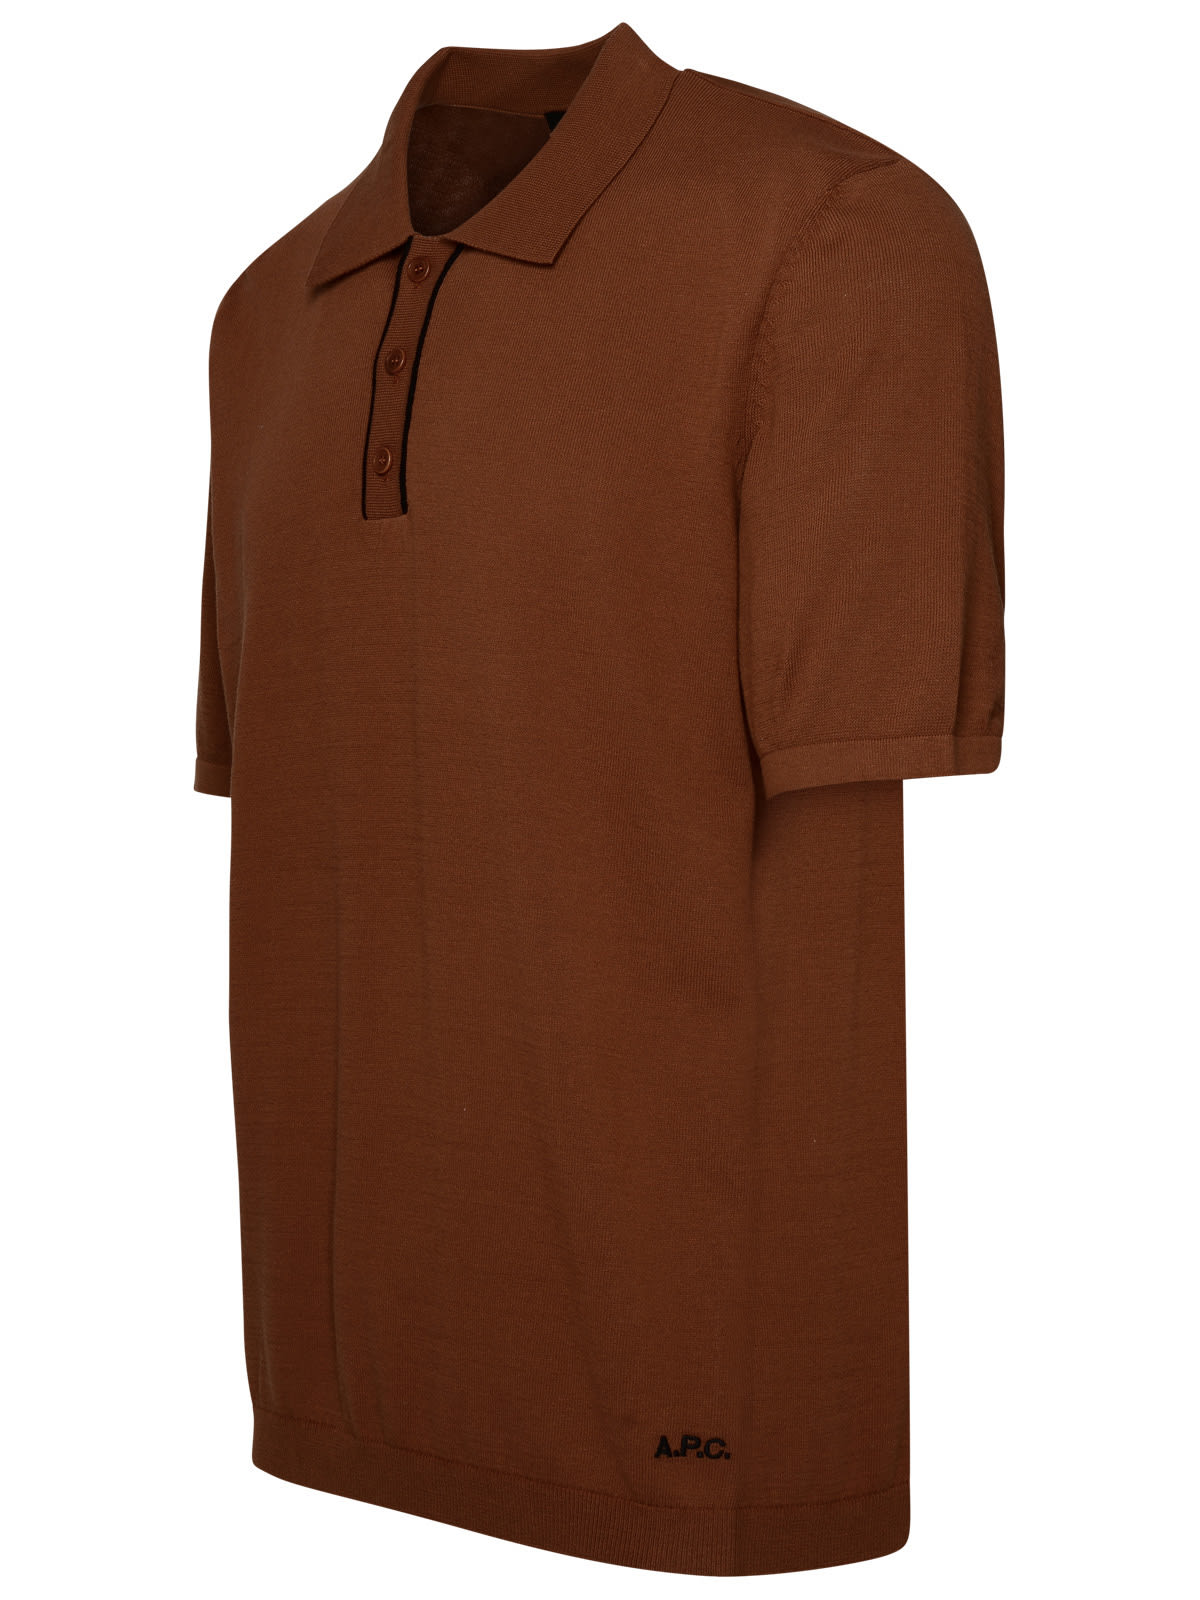 Shop Apc Brown Cotton Jacky Polo Shirt